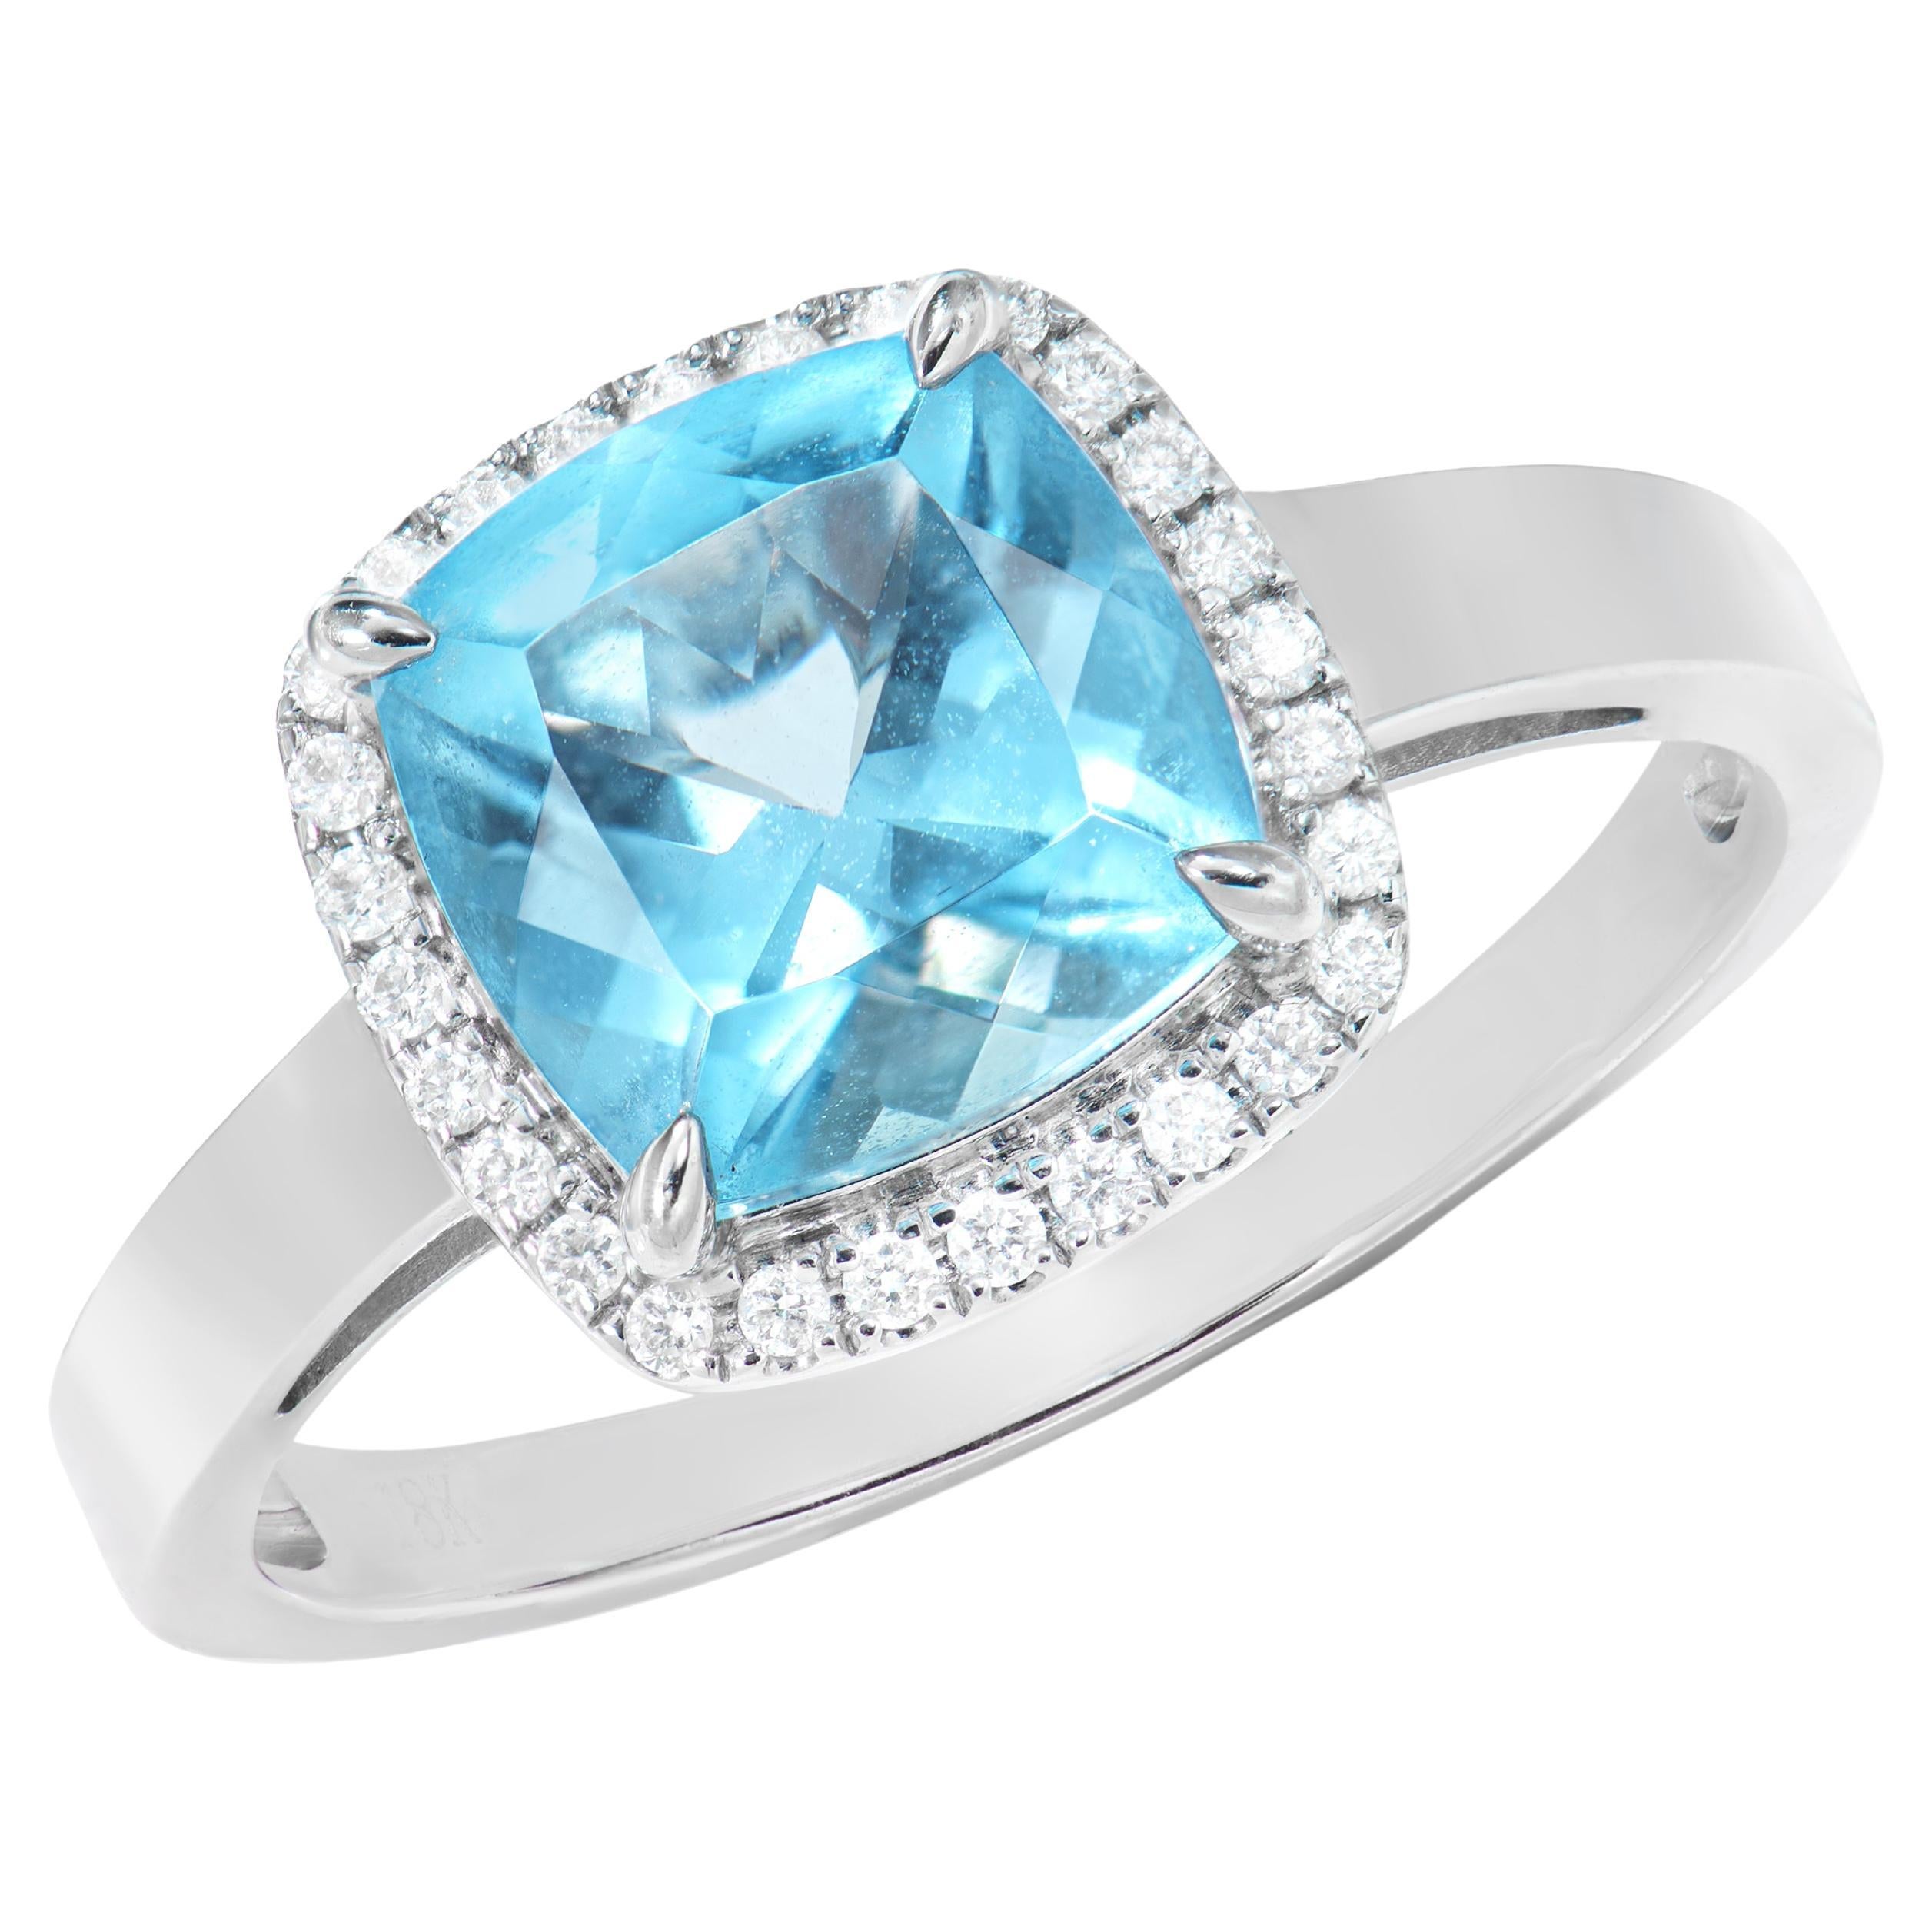 2.51 Carat Sky Blue Topaz Fancy Ring in 18Karat White Gold with White Diamond. For Sale